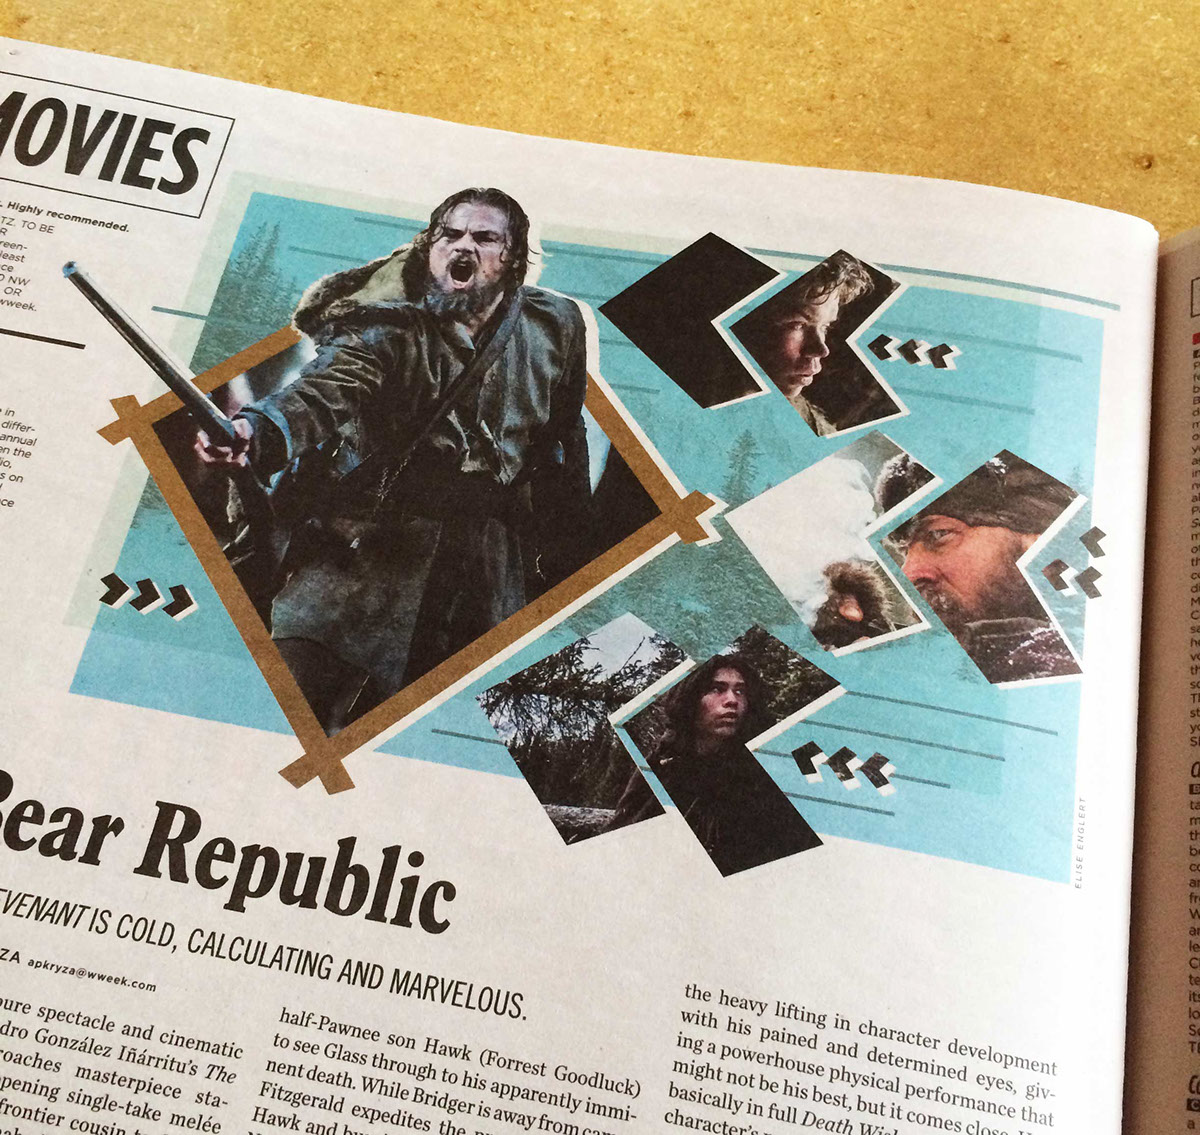 movie art movie film review Photo Montage creed Hunger Games mockingjay Tarantino Hateful Eight revenant star wars weed jane austen yoda